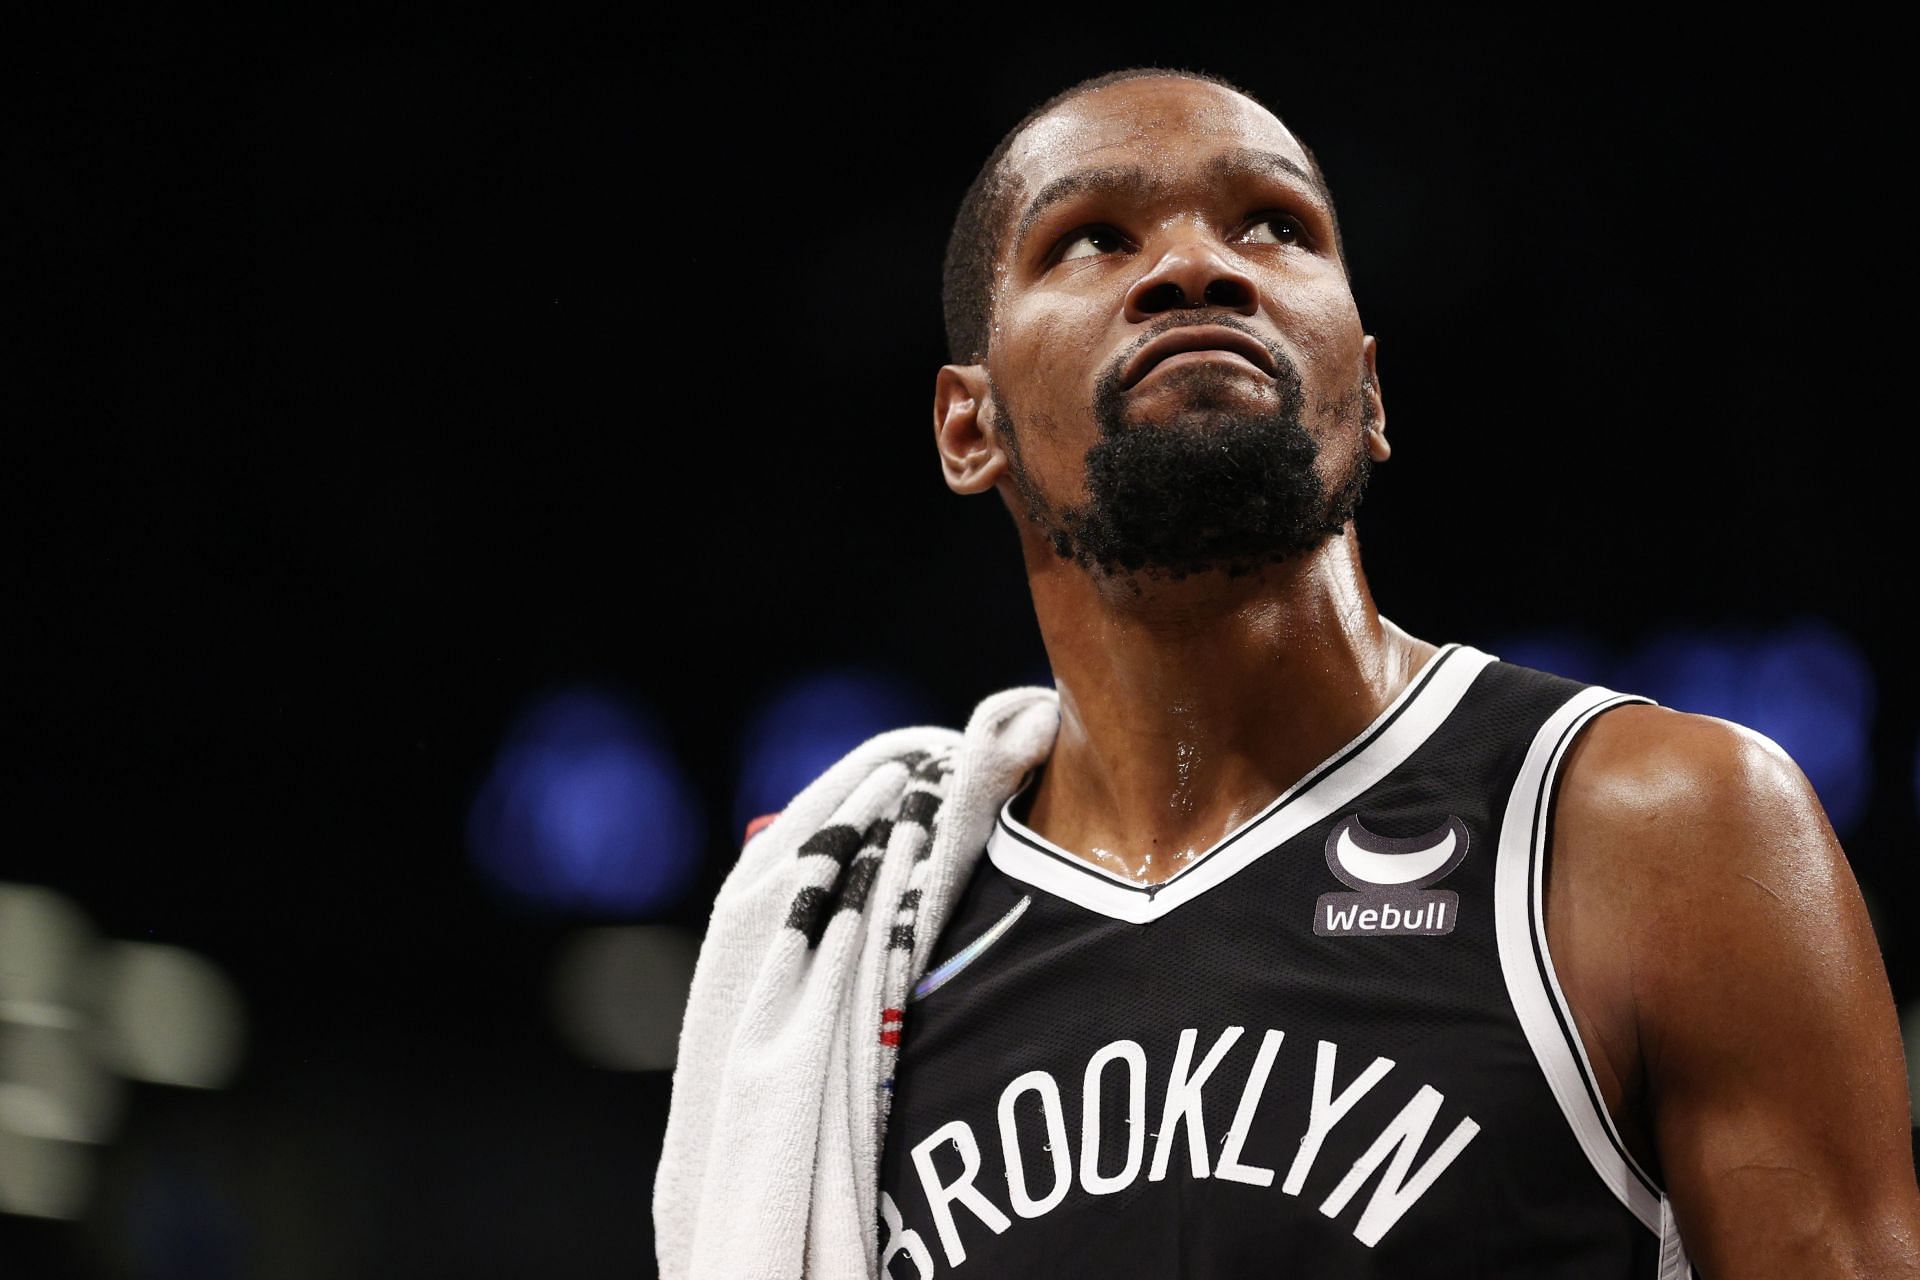 Brooklyn Nets superstar Kevin Durant